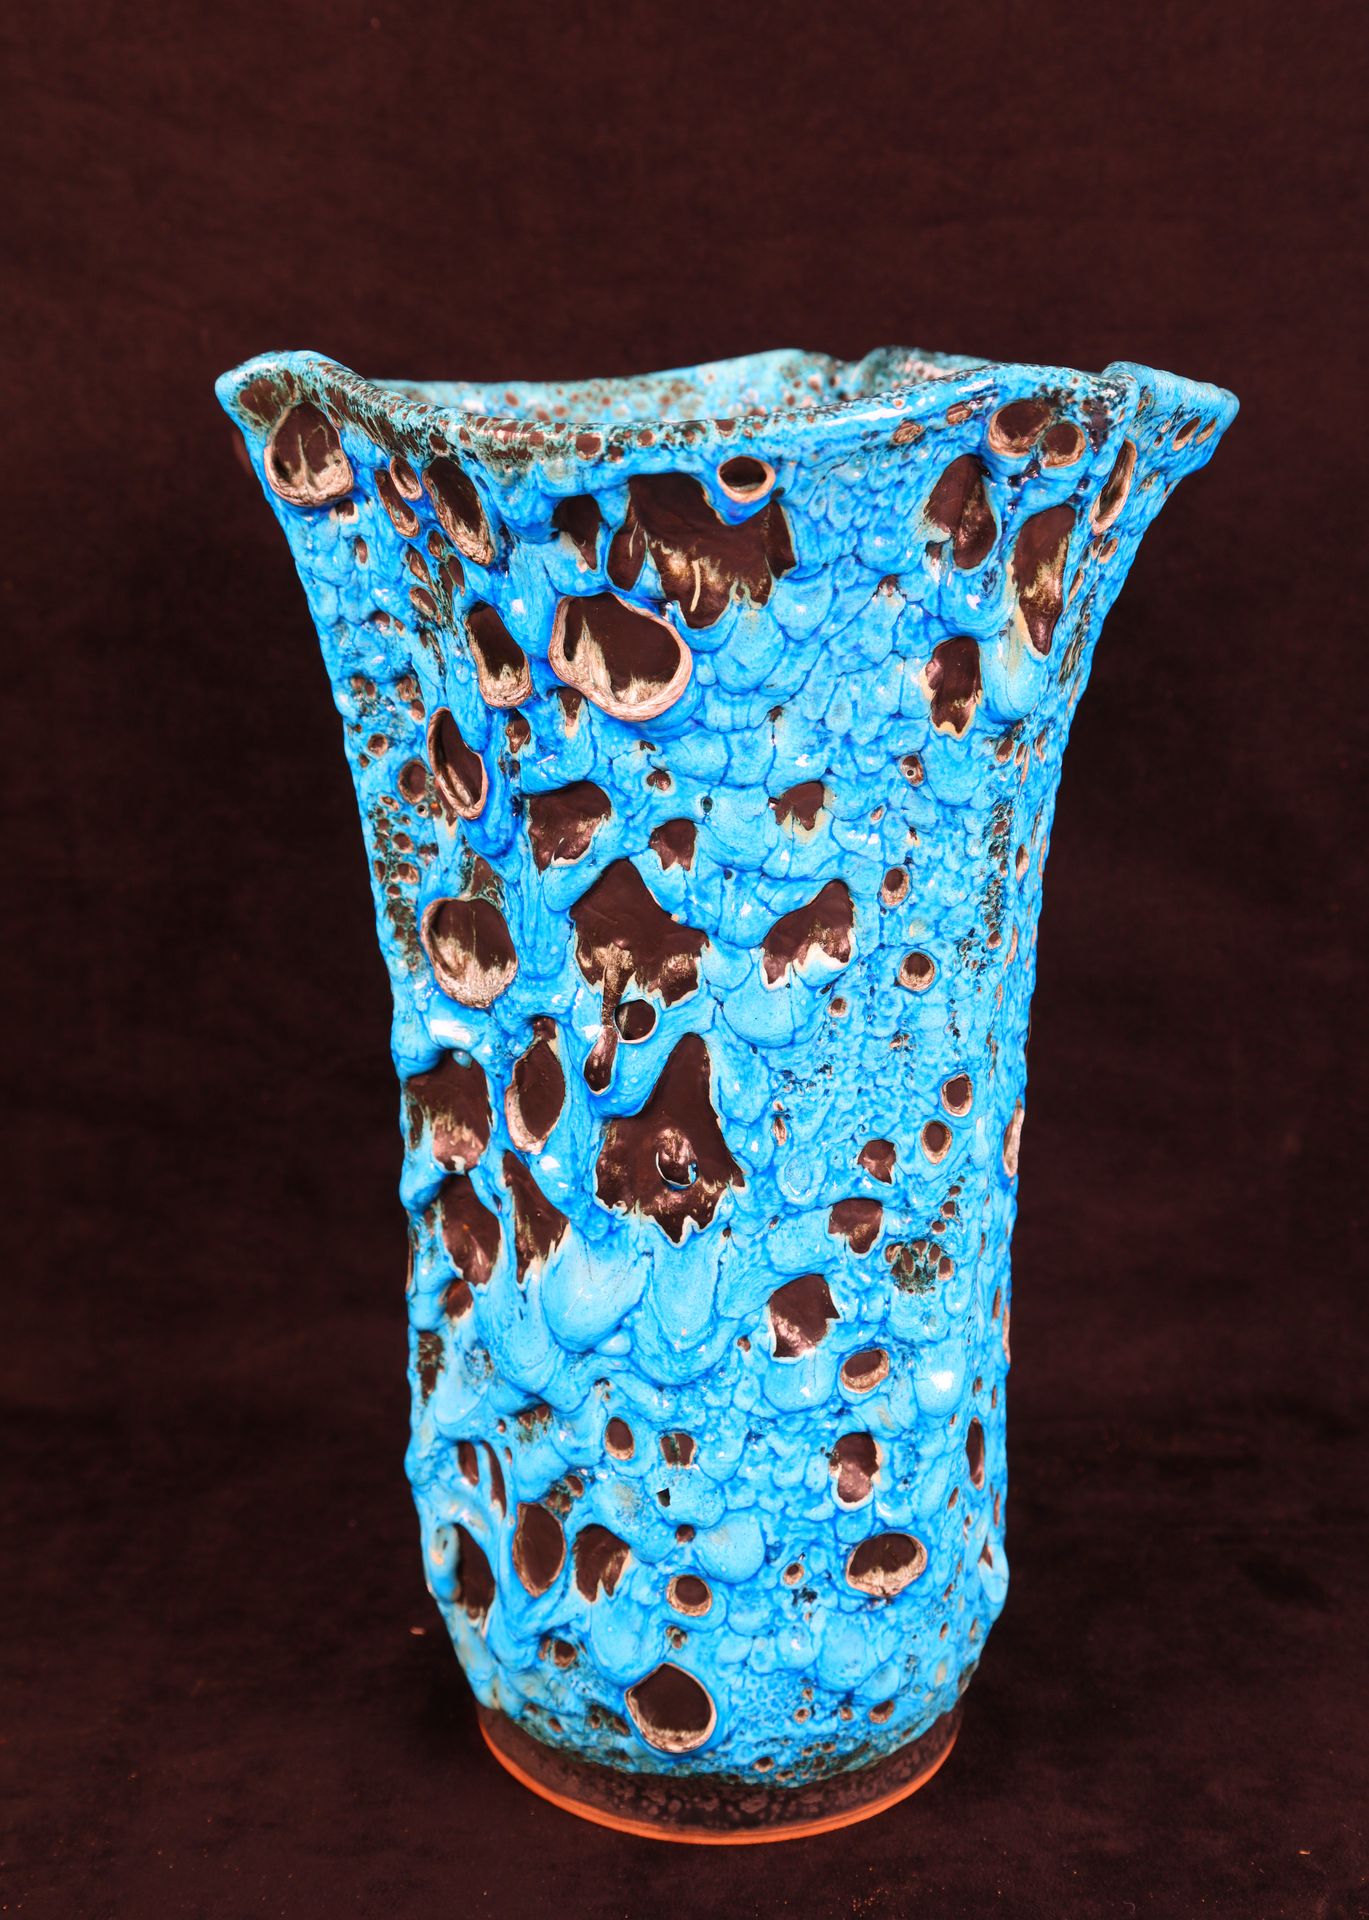 Null ECUME de MER, Cyclope, wichtige Vase aus türkisfarbener Fayence, bewegte Fo&hellip;